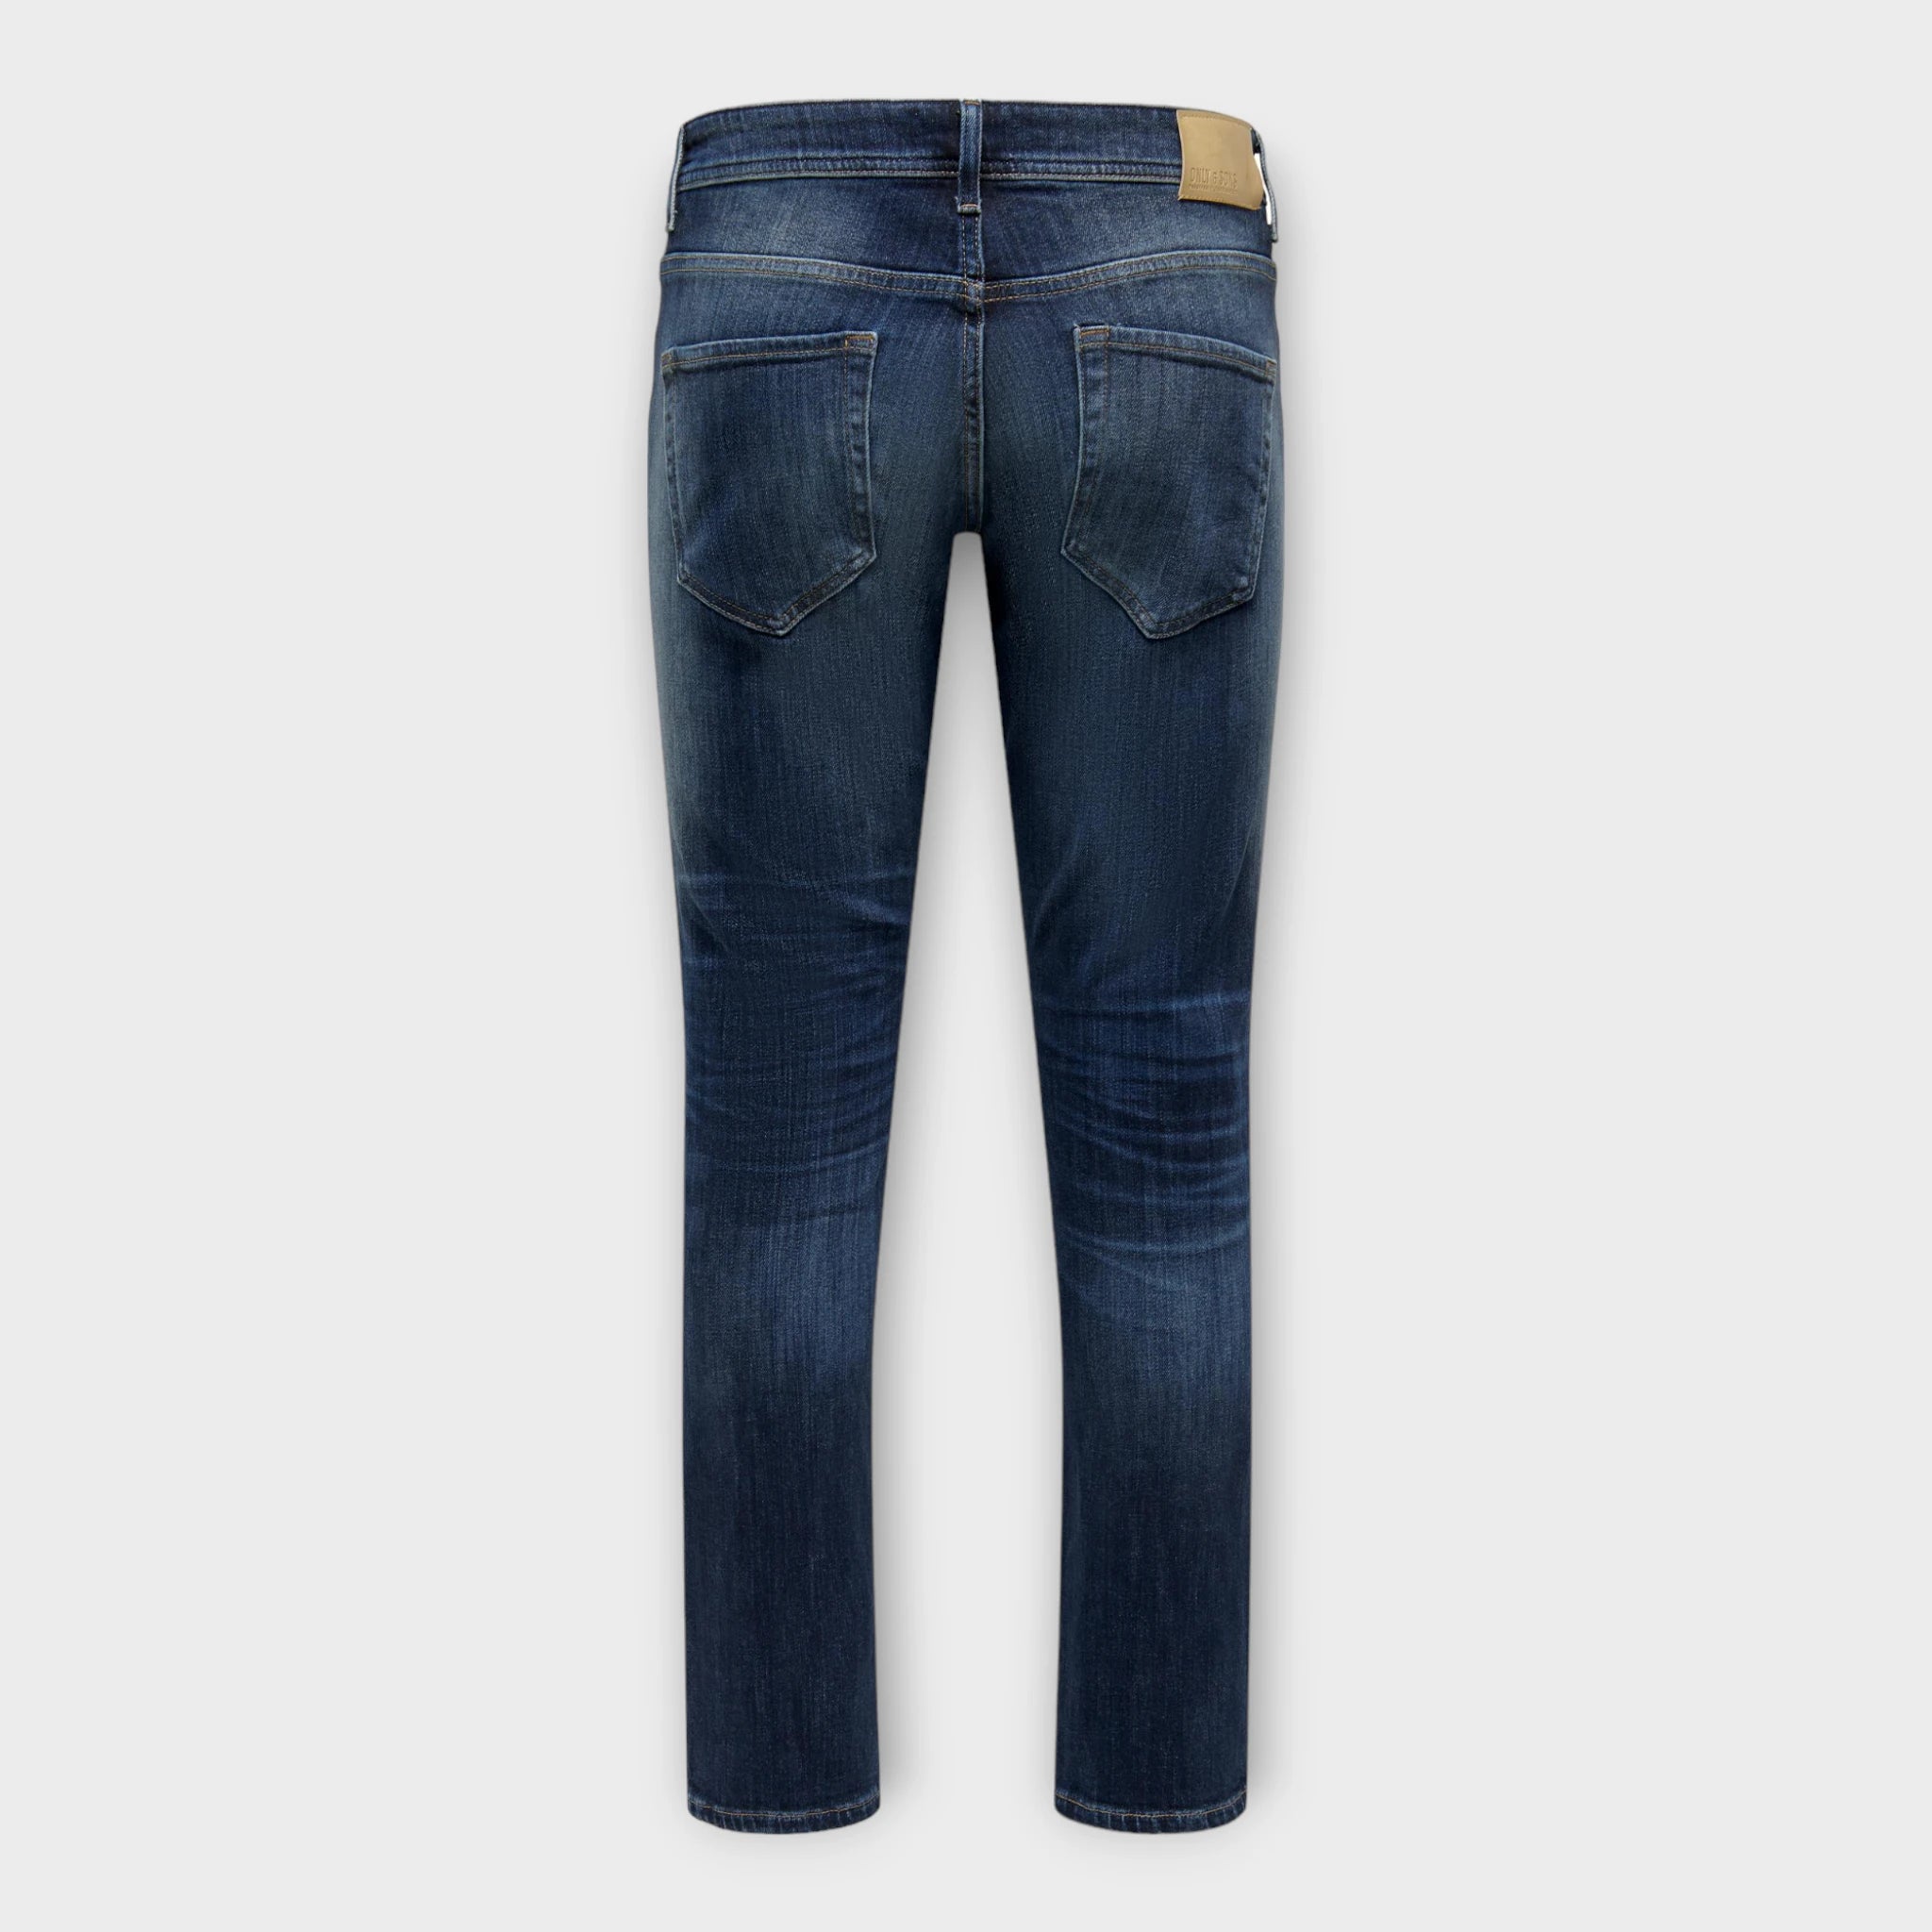 Weft Reg Blue 3251 Jeans - Blue Denim